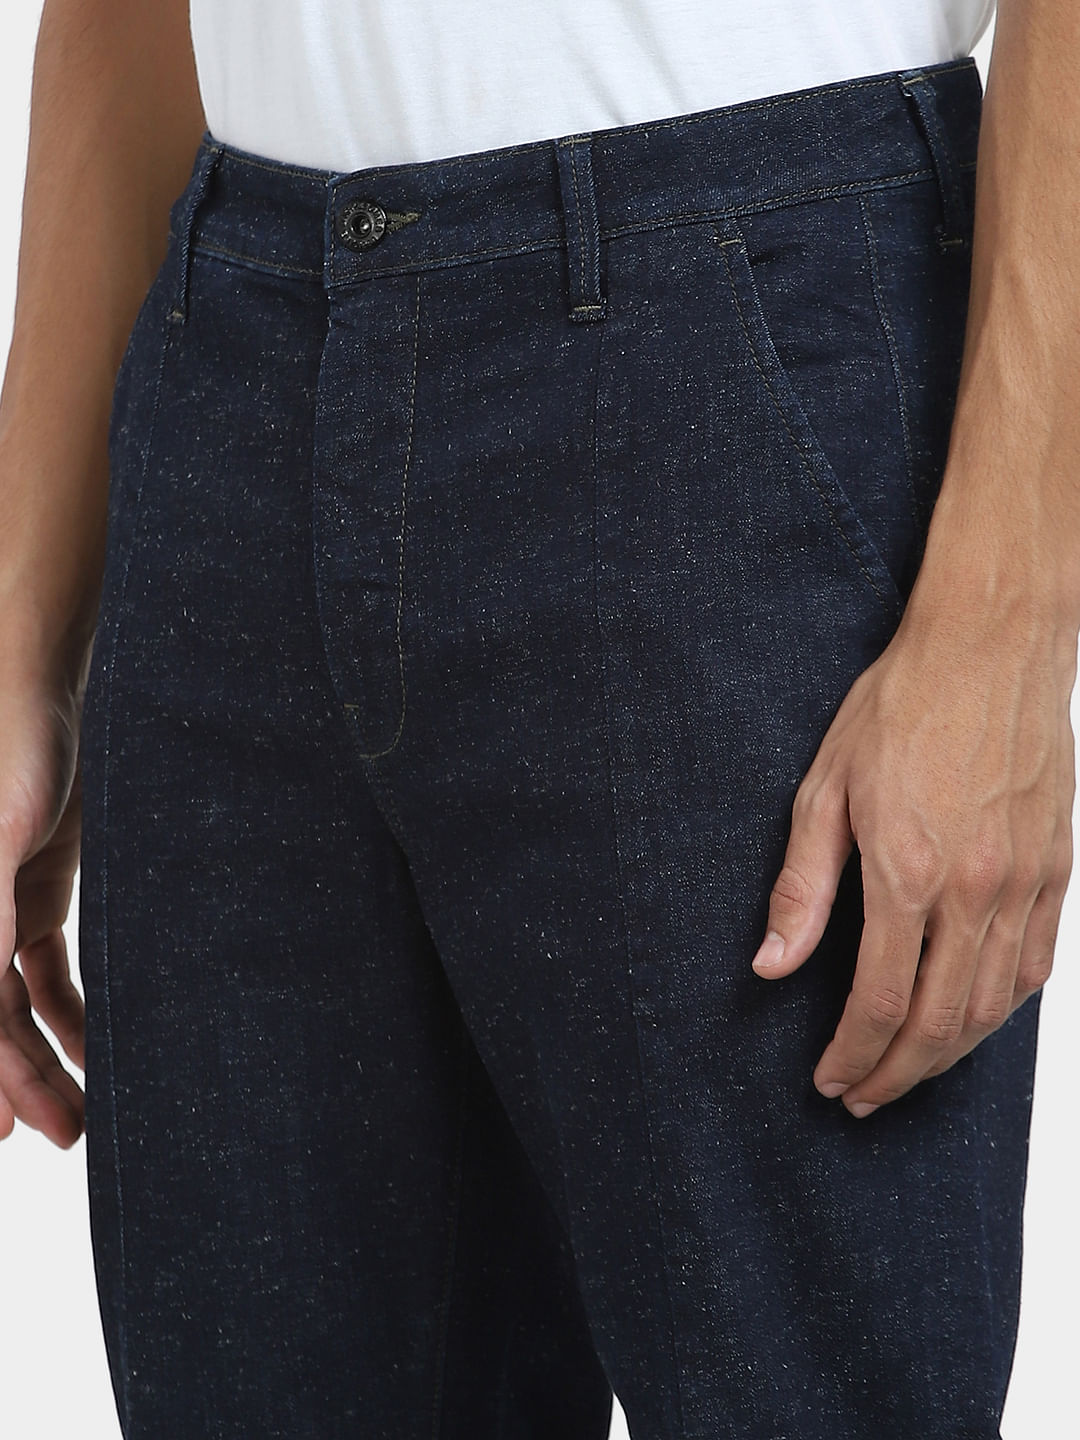 2022 Spring New Men Retro Blue Slimfit Stretch Jeans Fashion Antitheft  Zipper Pocket Design Denim Pants Male Brand Trousers  Jeans  AliExpress